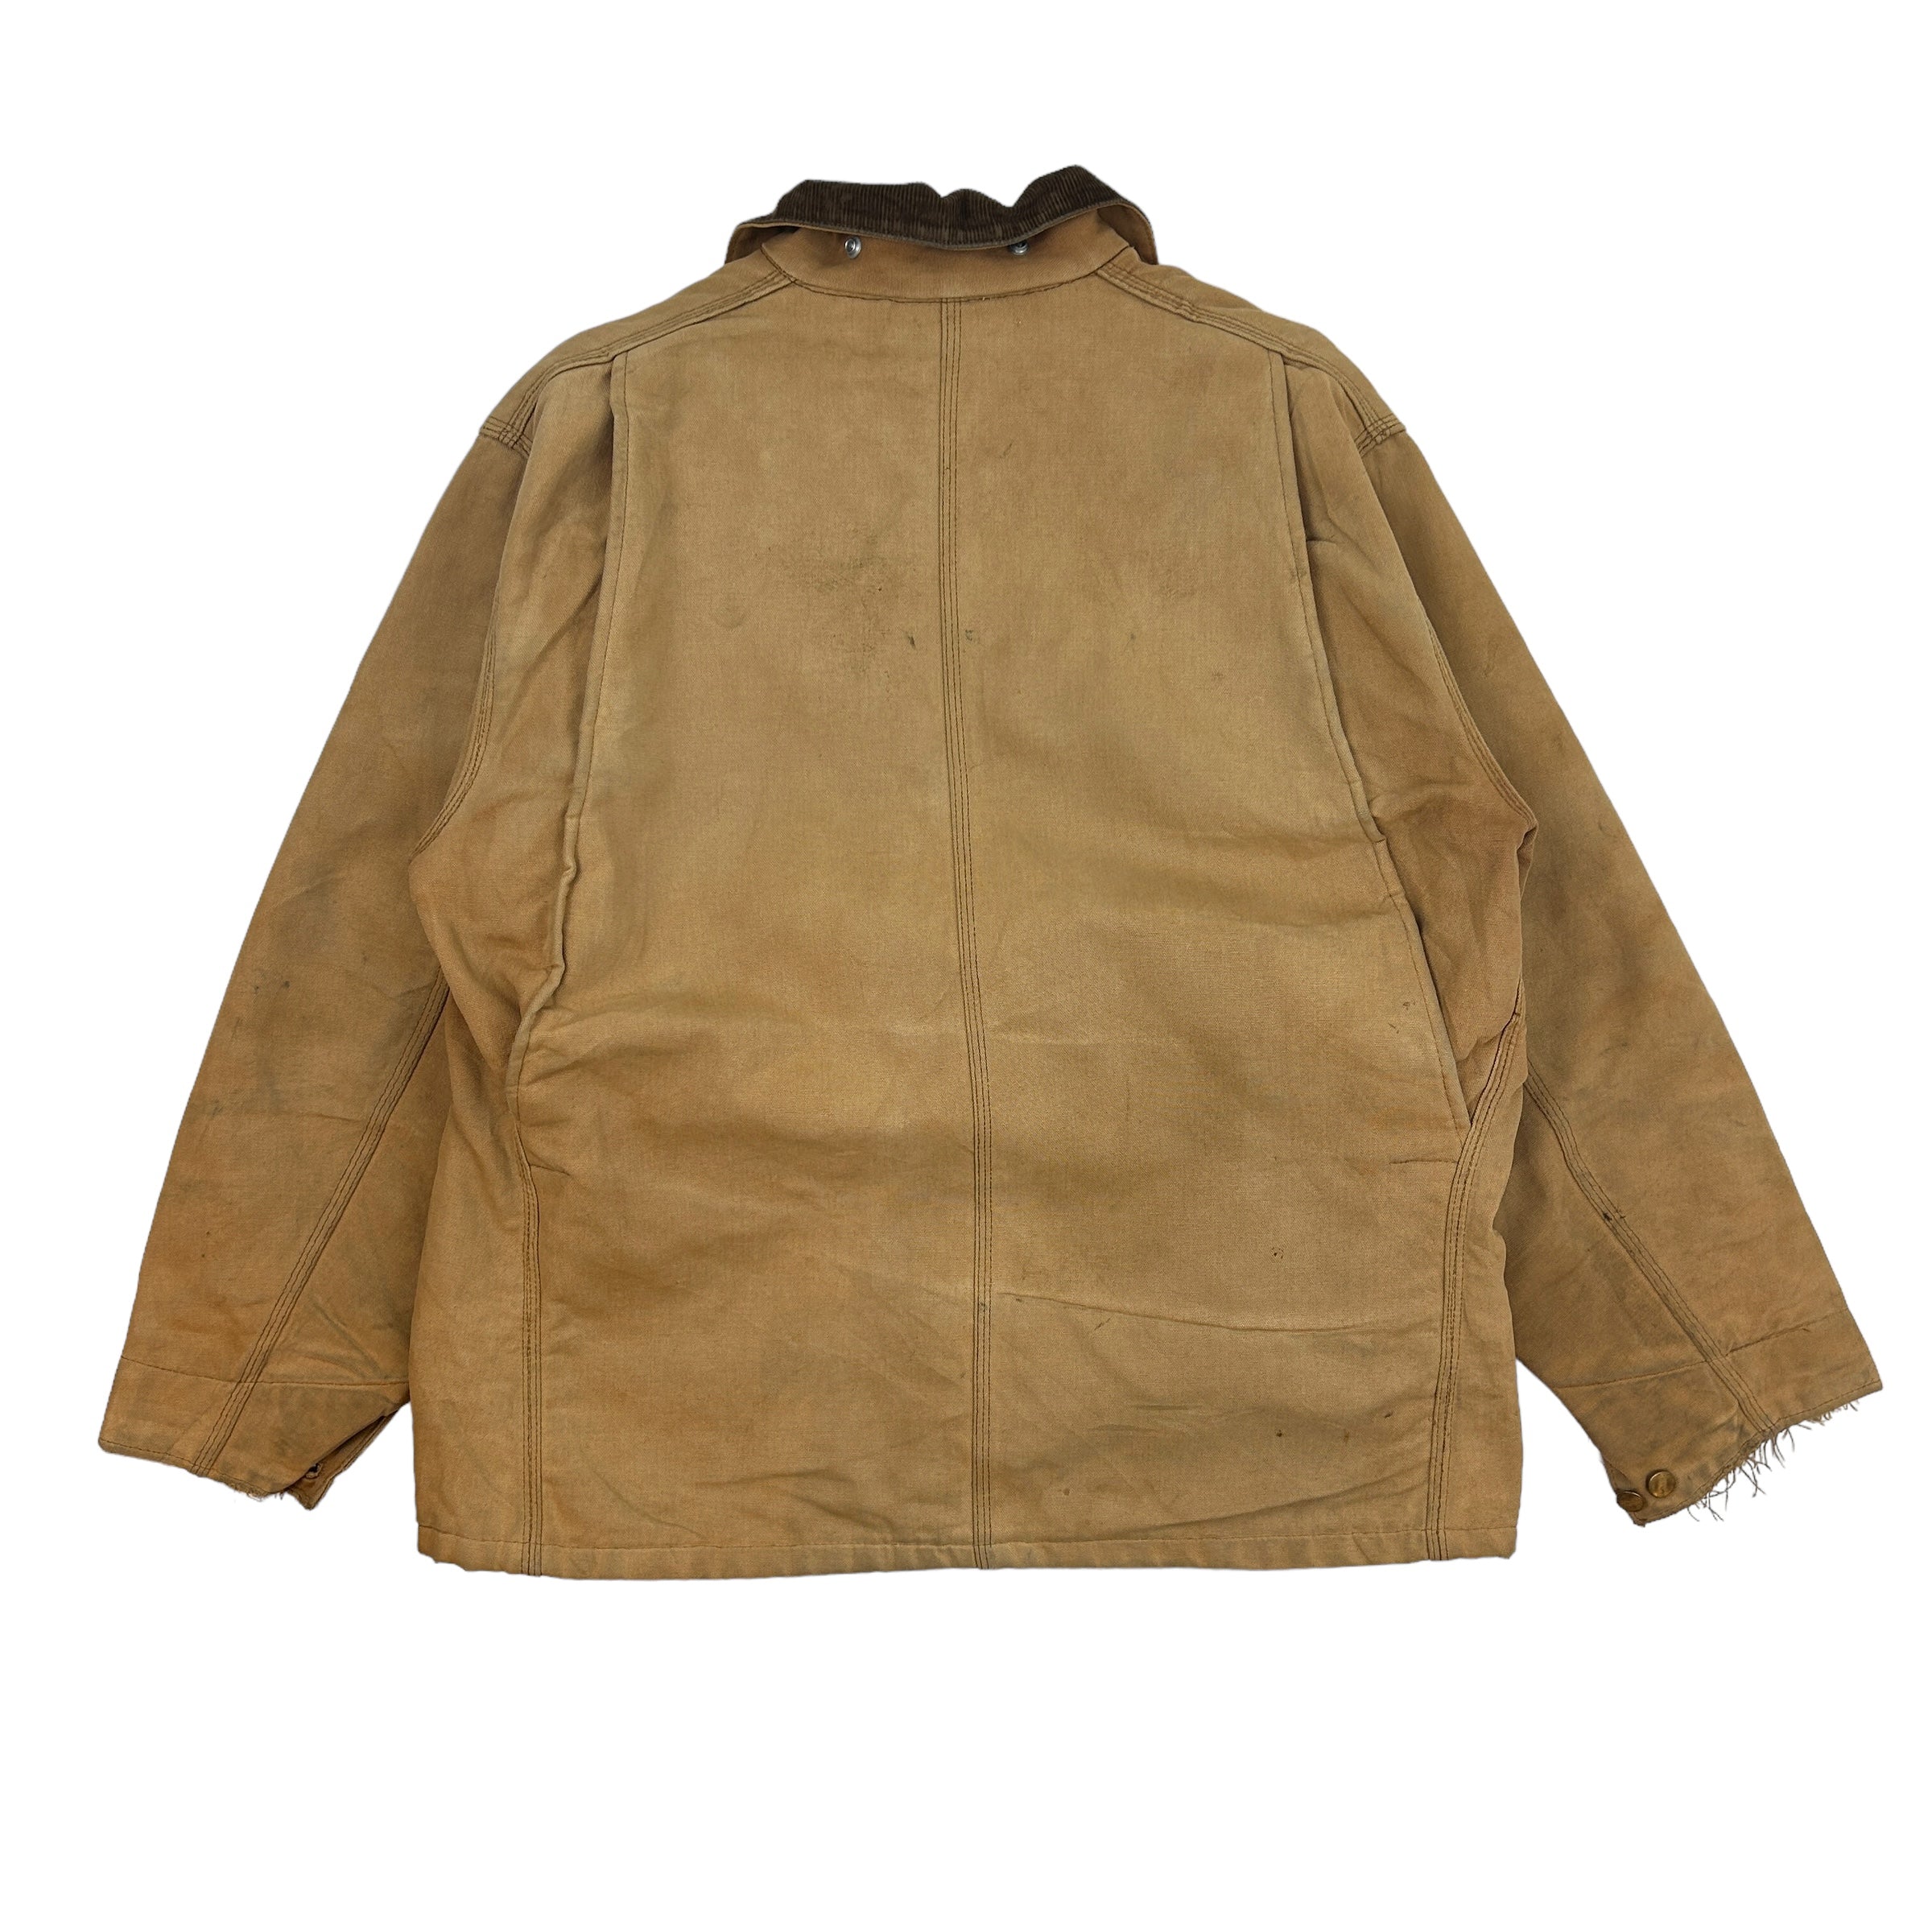 Vintage Carhartt Work Jacket Dark Tan